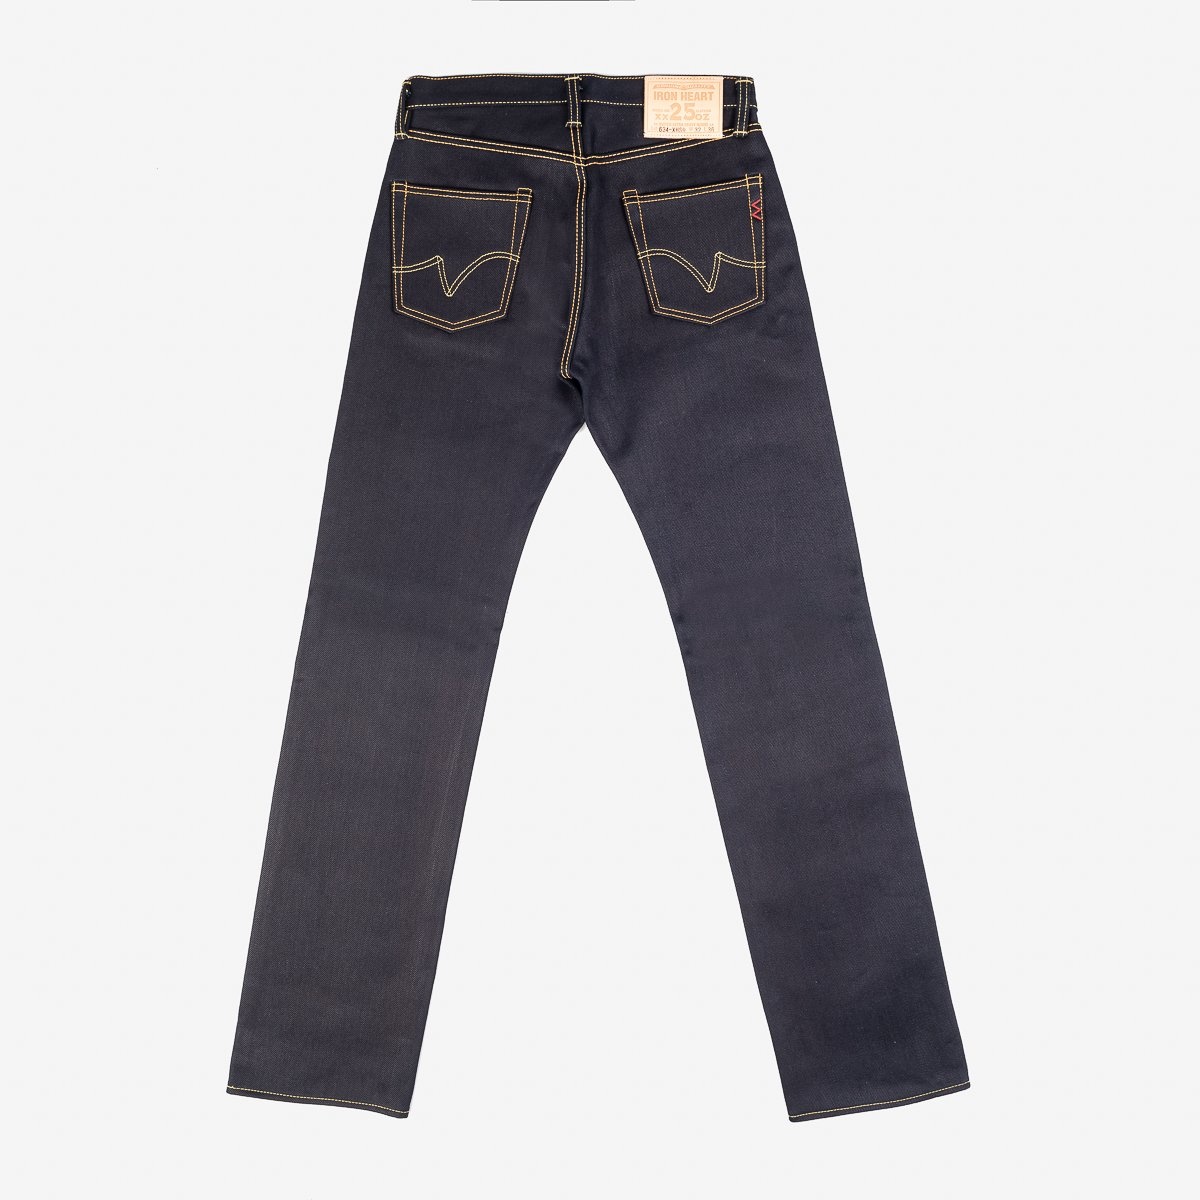 IH-634-XHSib 25oz Selvedge Denim Straight Cut Jeans - Indigo/Black - 5